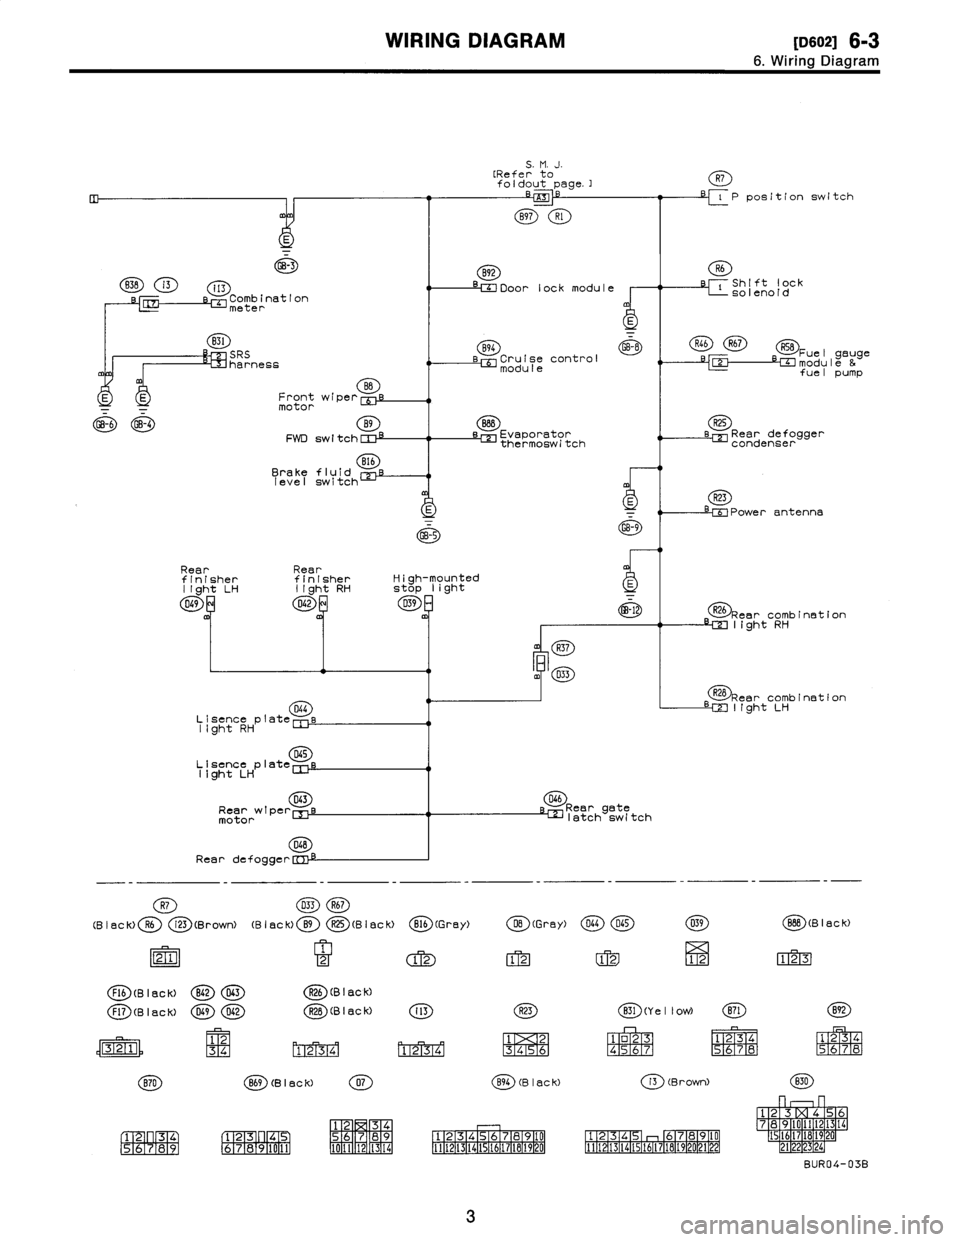 SUBARU LEGACY 1996  Service Repair Manual 
WIRING
DIAGRAM
[oso2i
6-3

6
.
Wiring
Diagram

GB-3

B3B
i3
i13
Comb
ination
L~J
meter

B31
SRS
harness

BB
E
E
Frontwiper
[Uf
motor

4-6
GB-4
B9
FWD
sw
I
tch
CI
:~

816
Brakefluid
level
switch

Rea